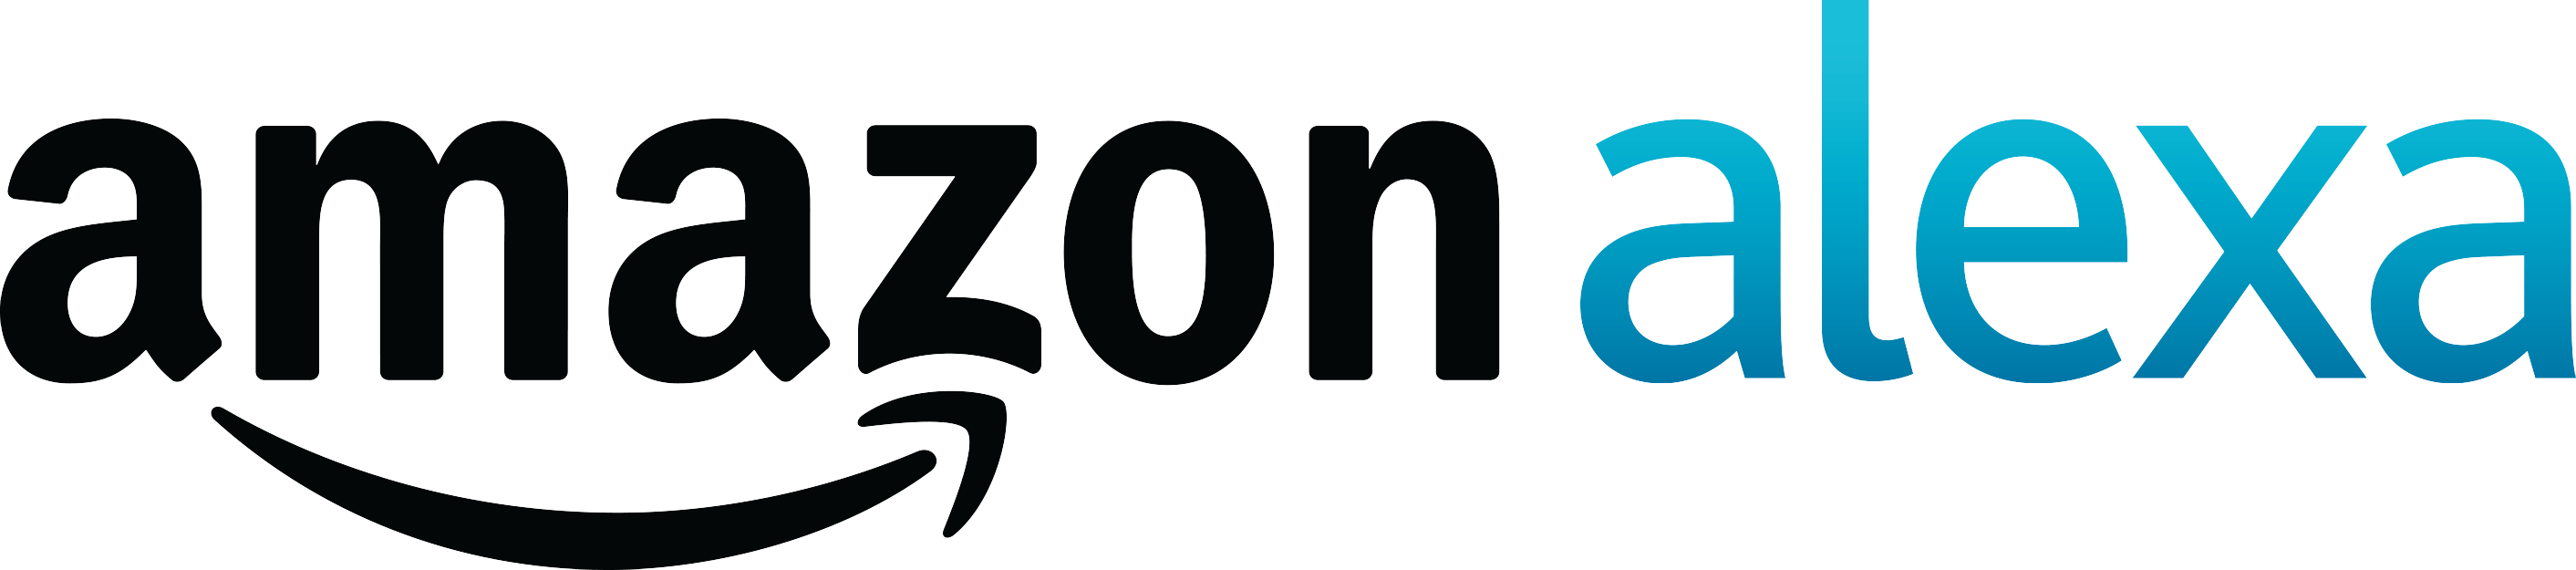 Amazon Alexa Logo - Amazon Alexa logo Venture Forum